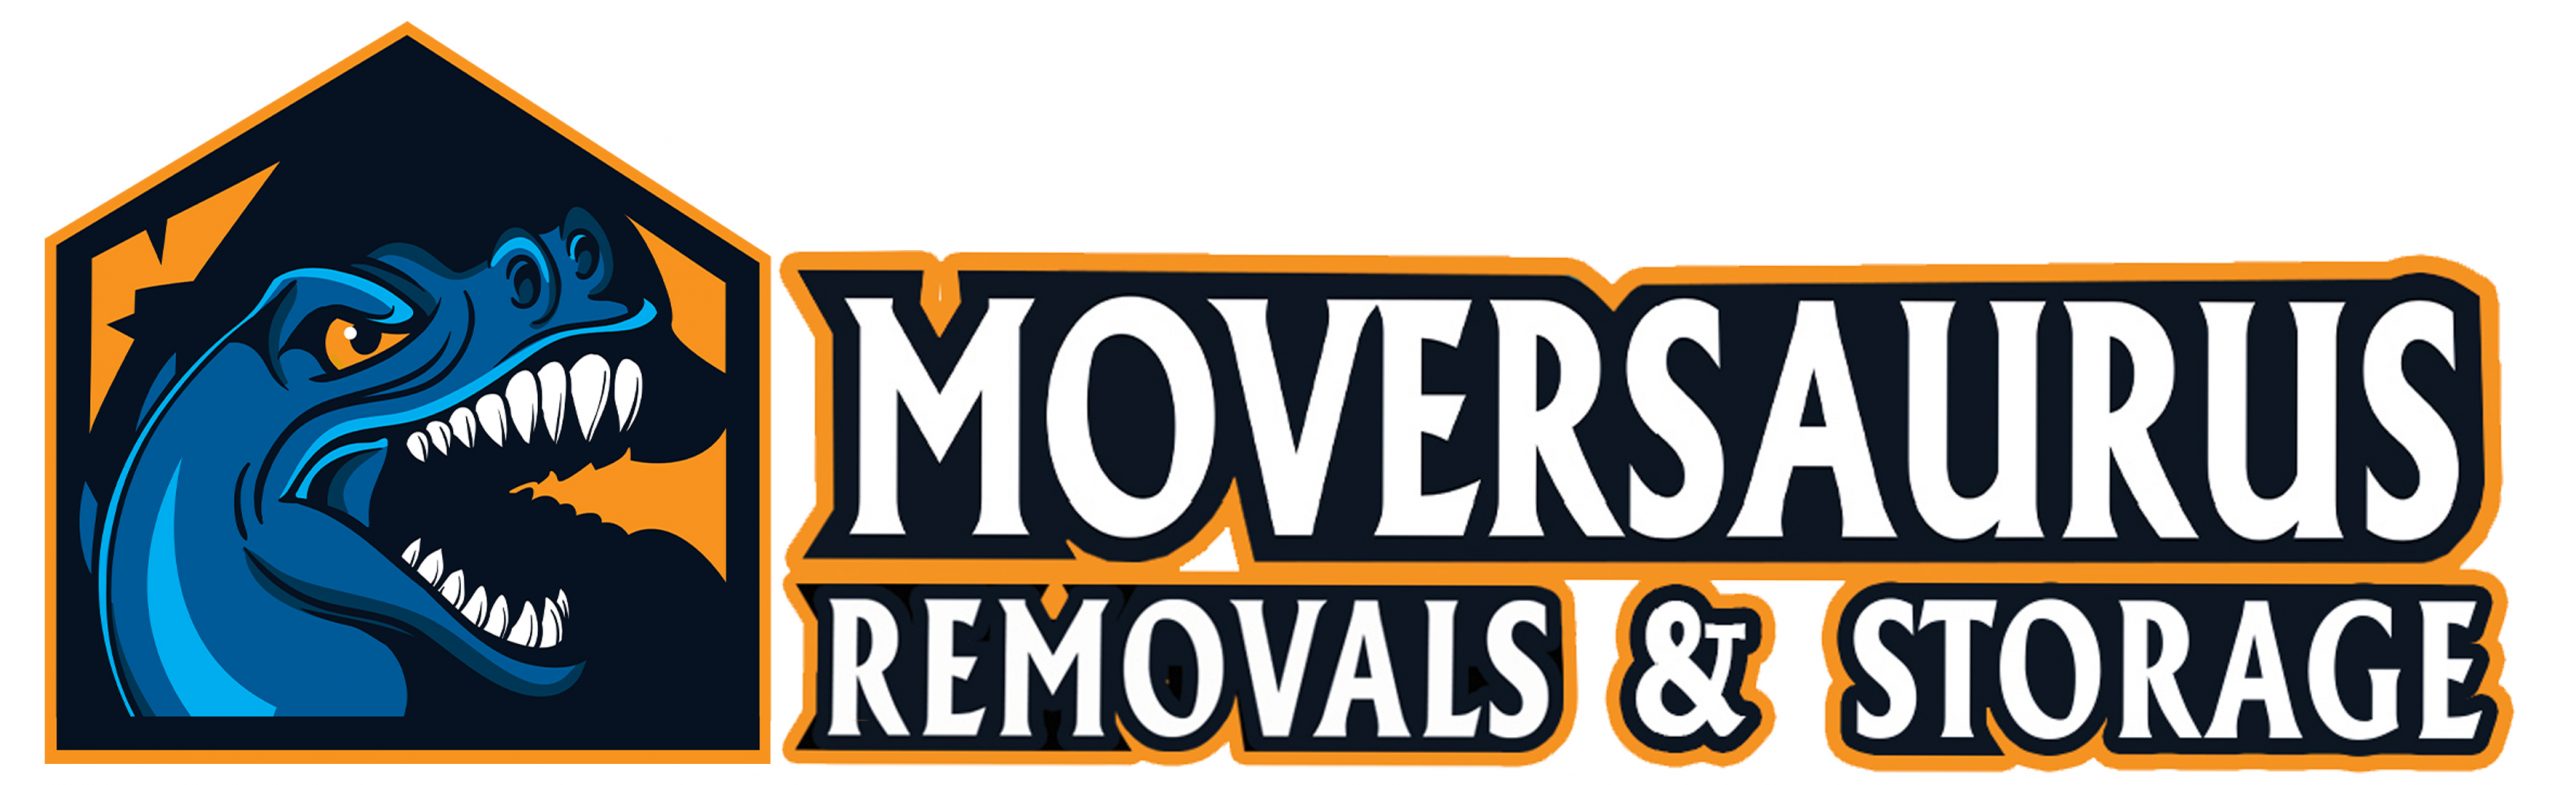 Moversaurus-Removals and Storage